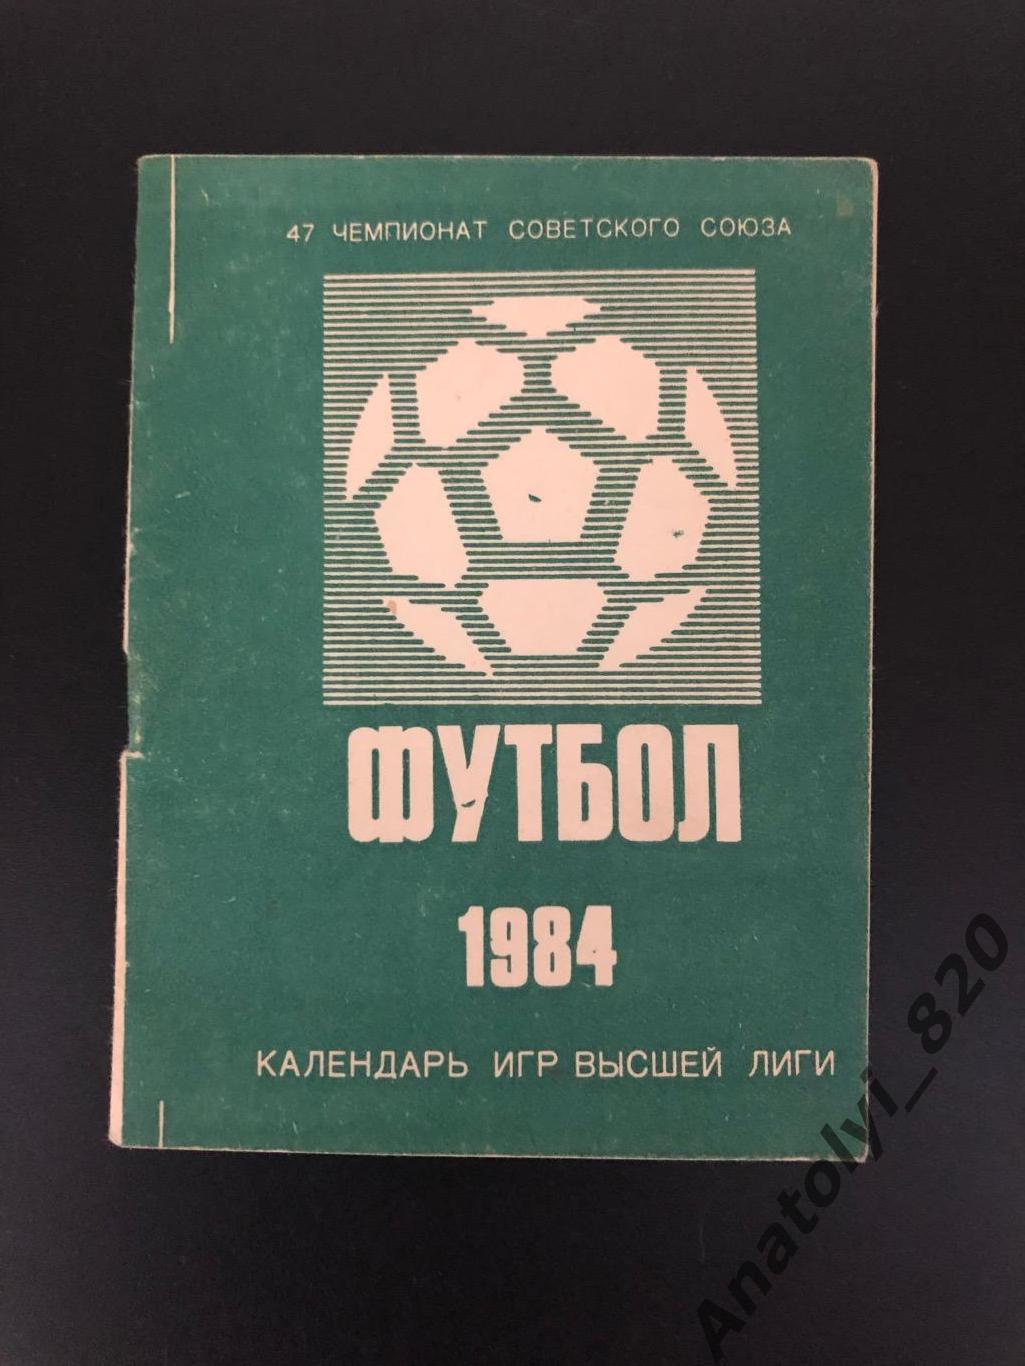 Москва 1984 год календарь игр